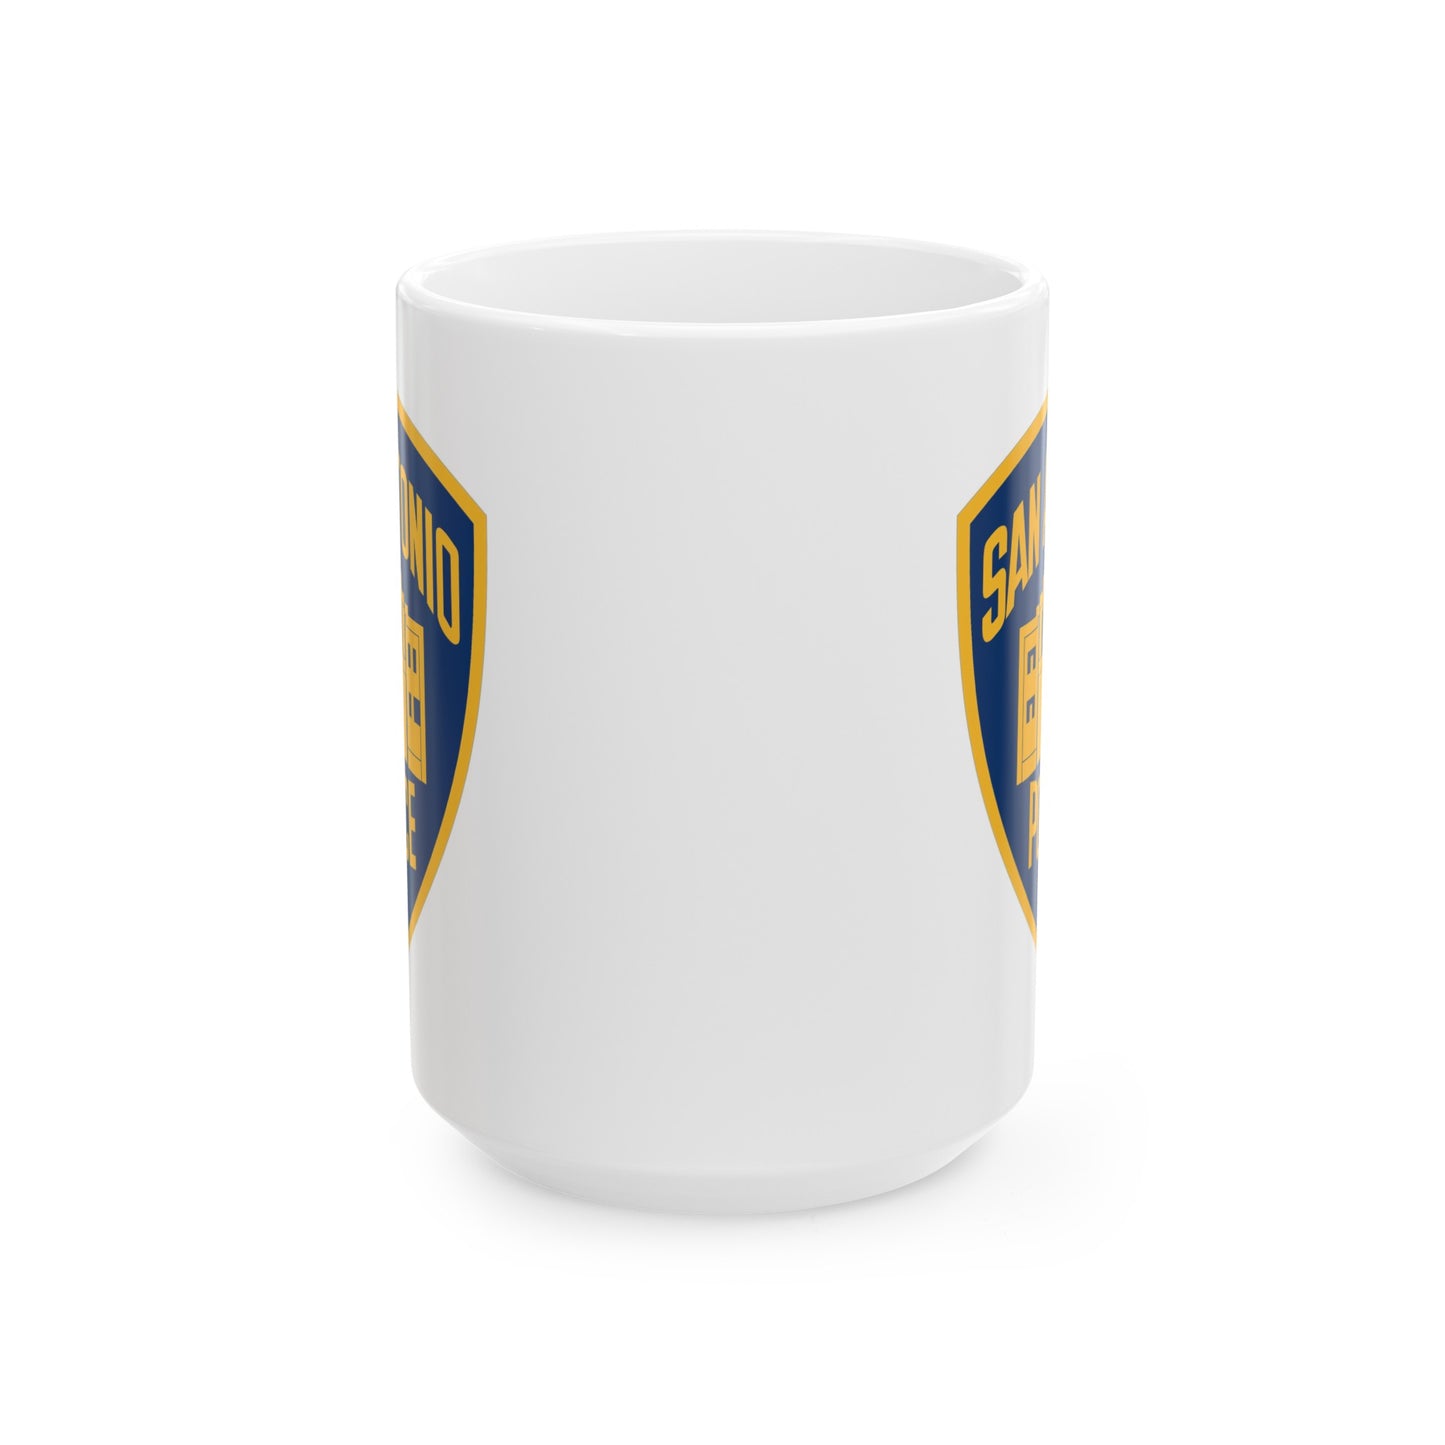 San Antonio Police Coffee Mug - Double Sided White Ceramic 15oz by TheGlassyLass.com